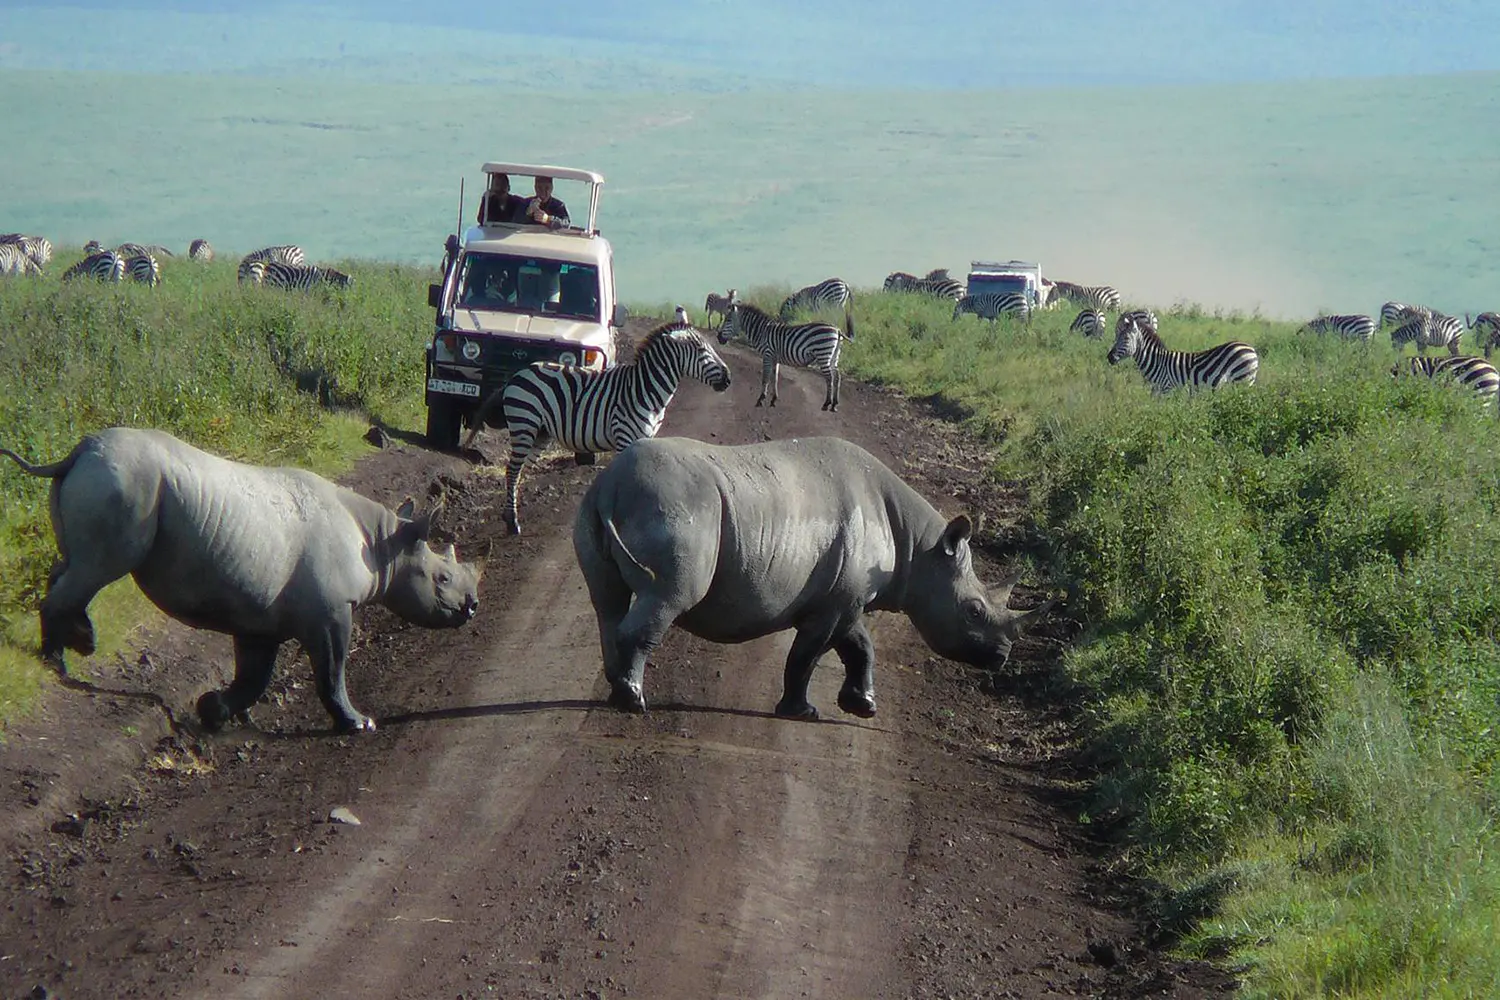 Ngorongoro Day Trip Private Safari